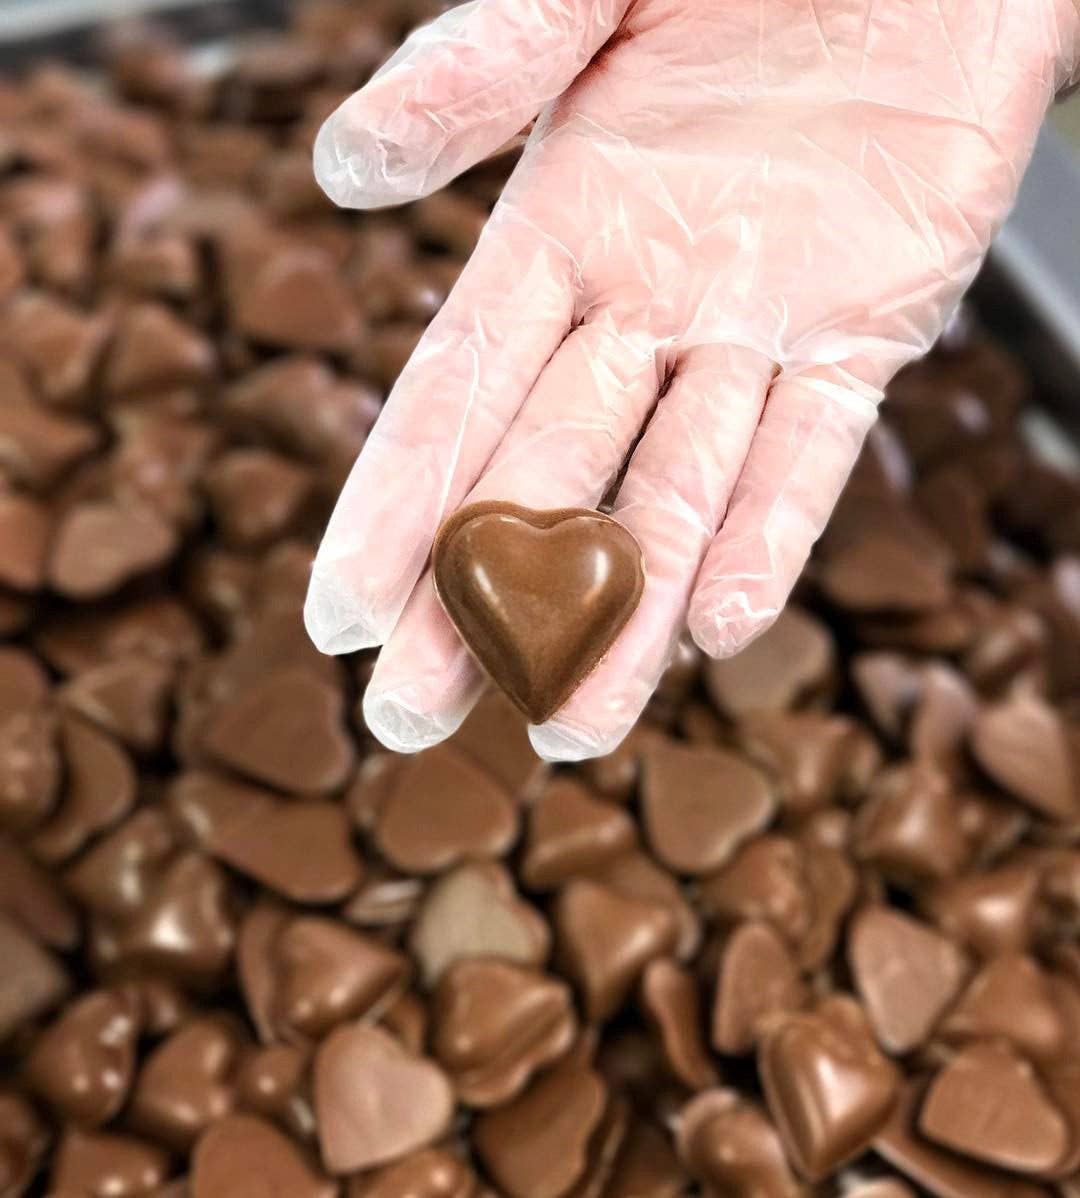 Vermont Nut Free Chocolates - Valentine Mini Chocolate Hearts